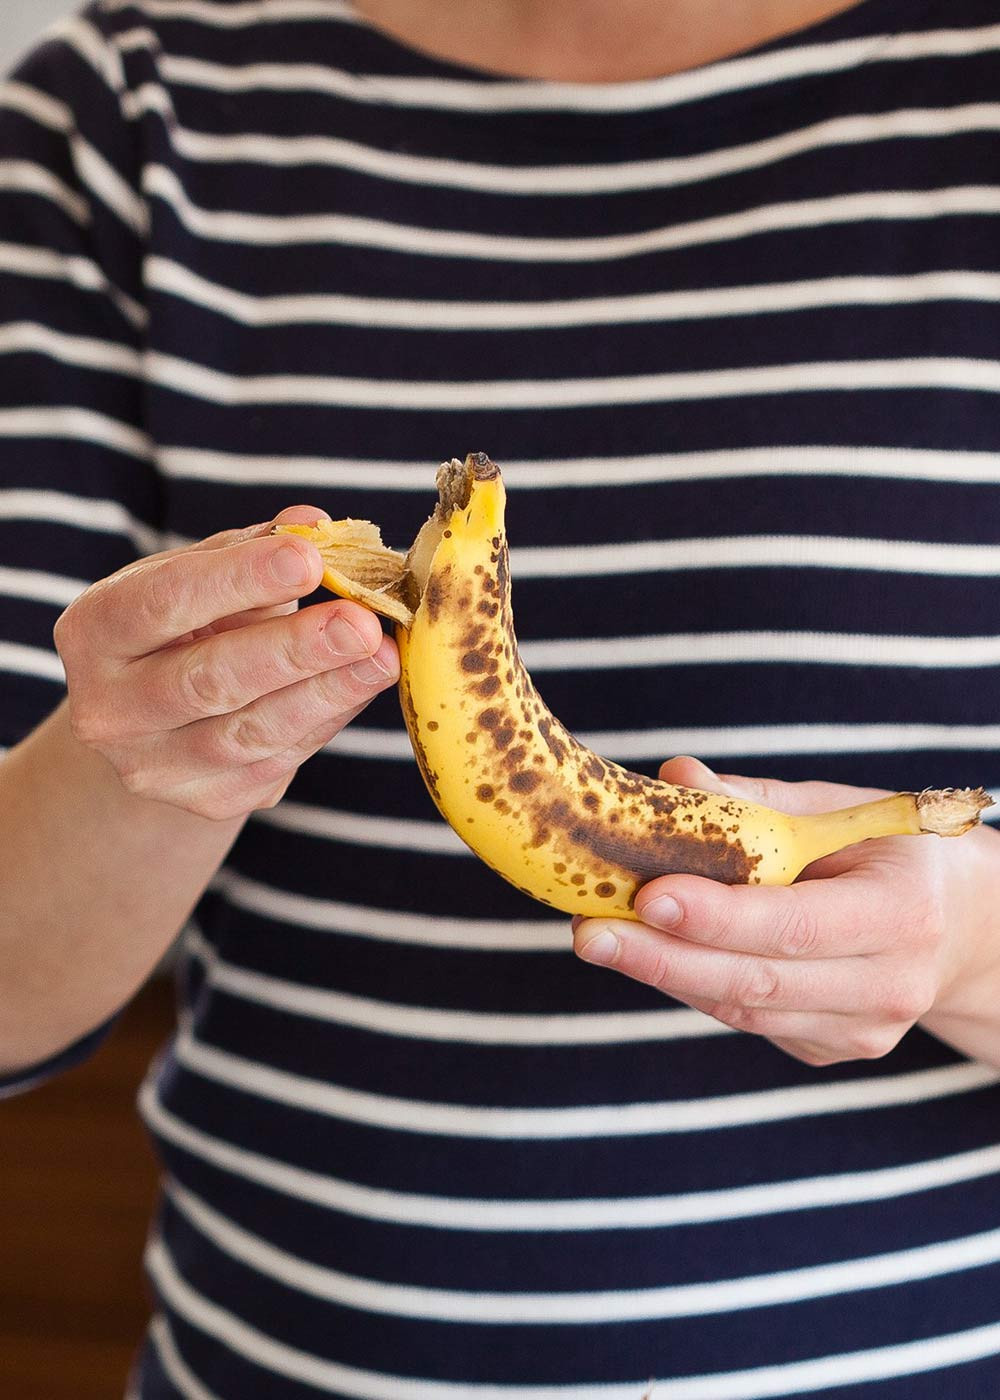 Bananas And Health